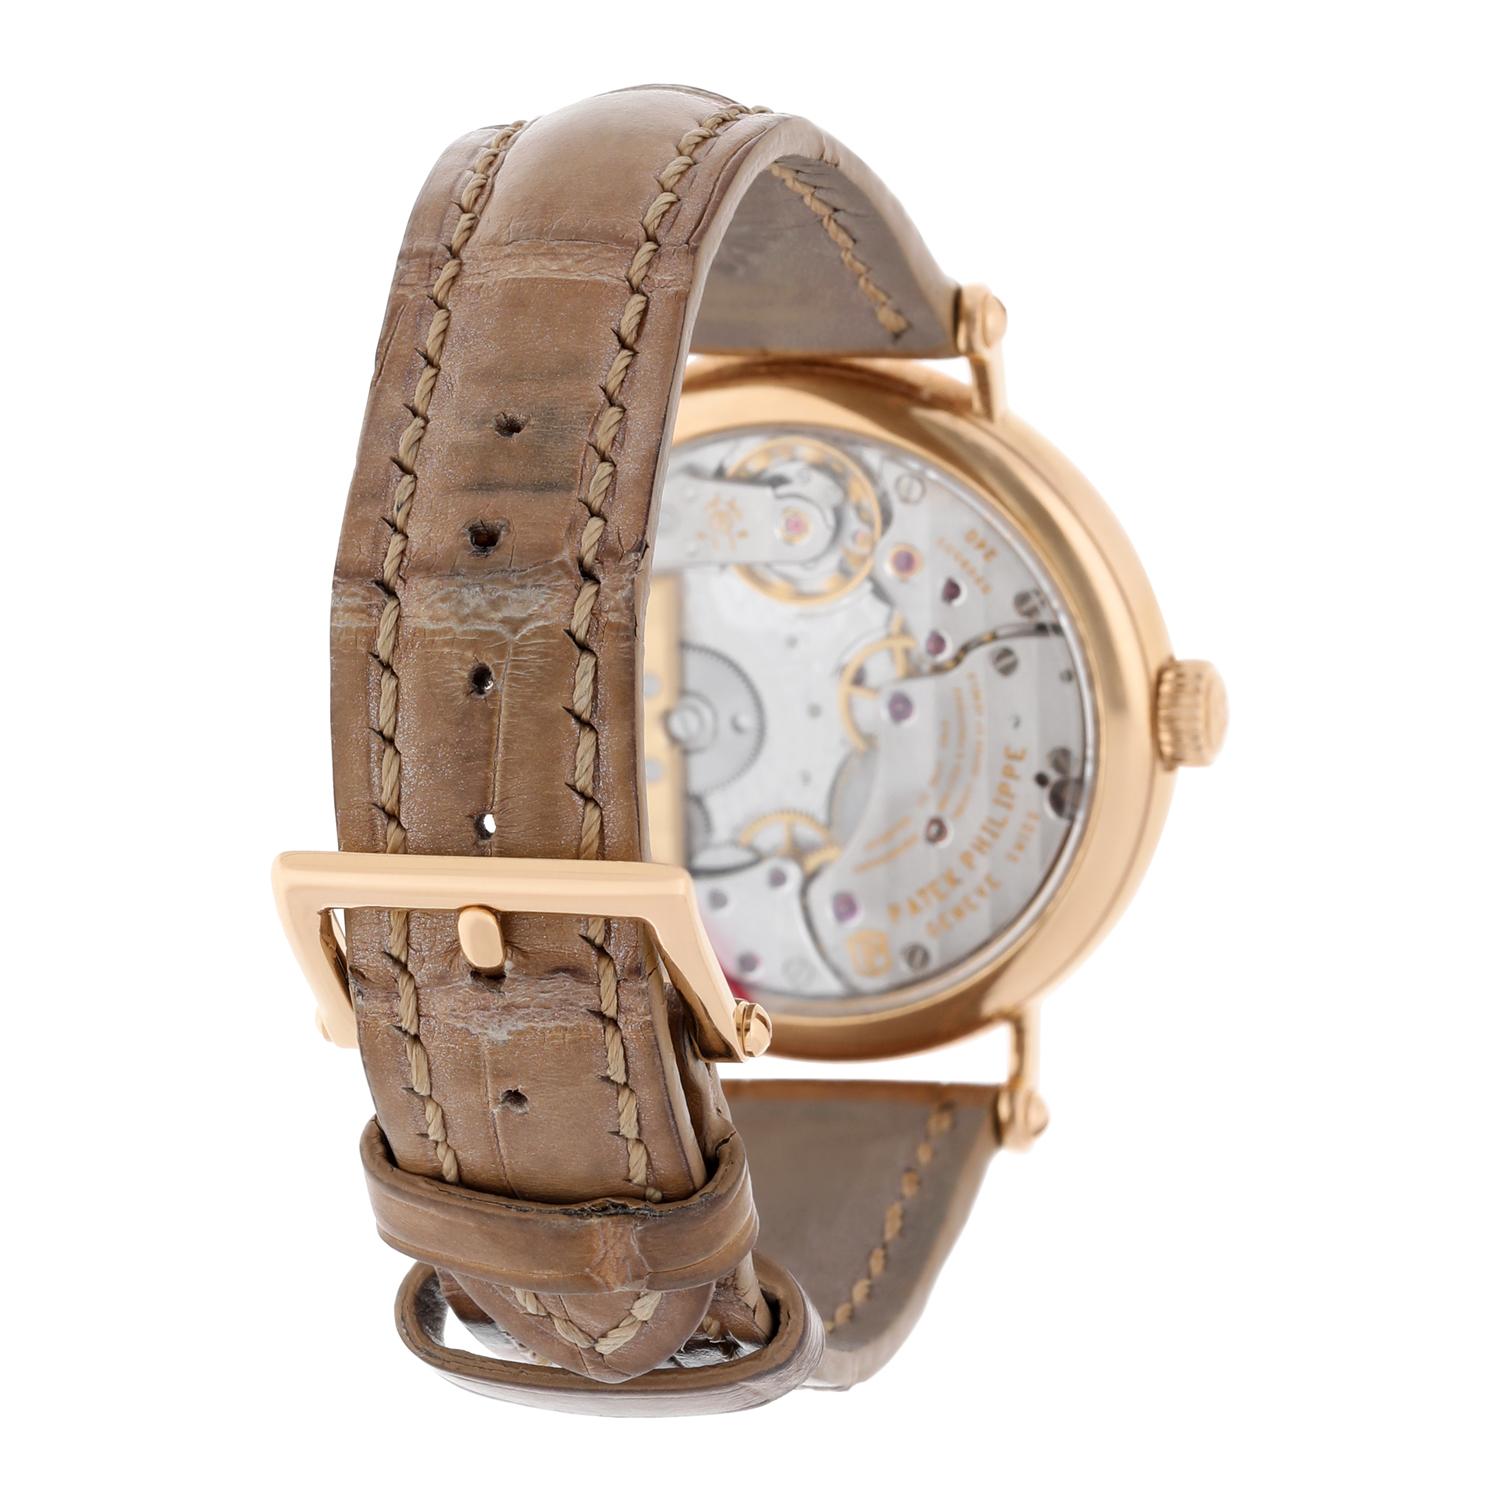 Patek Philippe Calatrava Thin 18kt Rose Gold Automatic Ladies Watch 7200R-001 For Sale 2